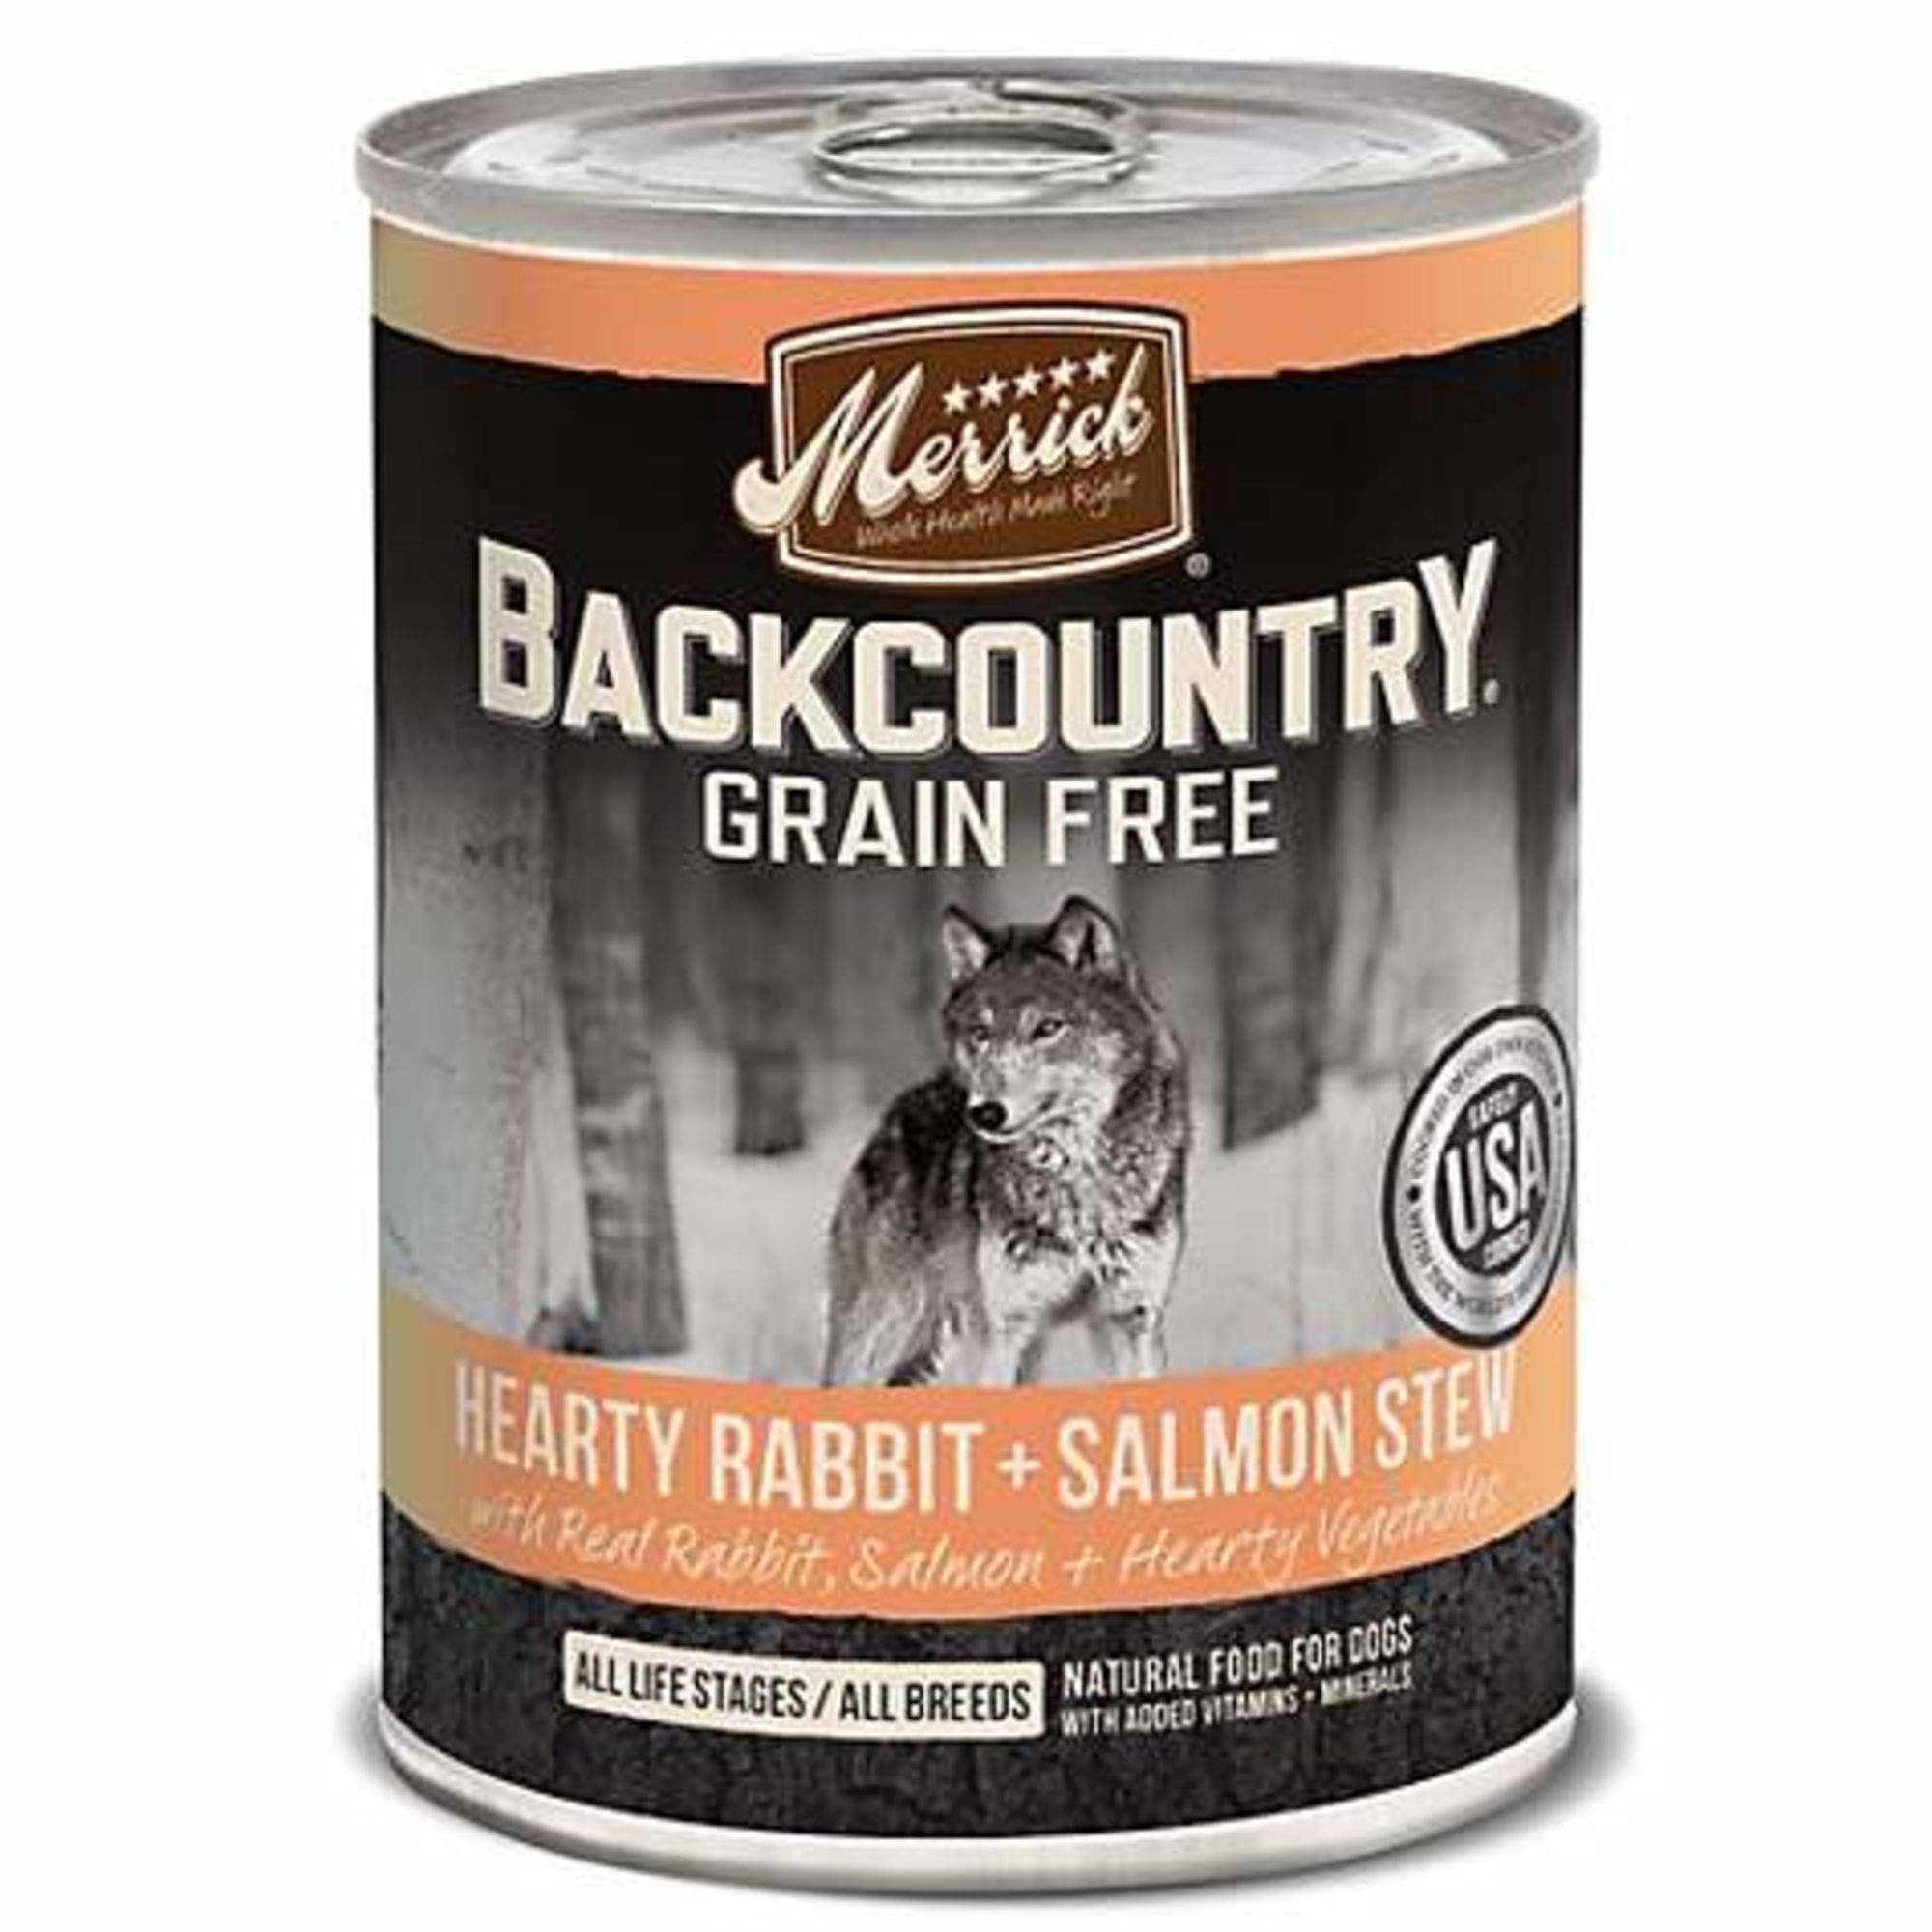 Merrick backcountry 12.7oz grain free salmon stew